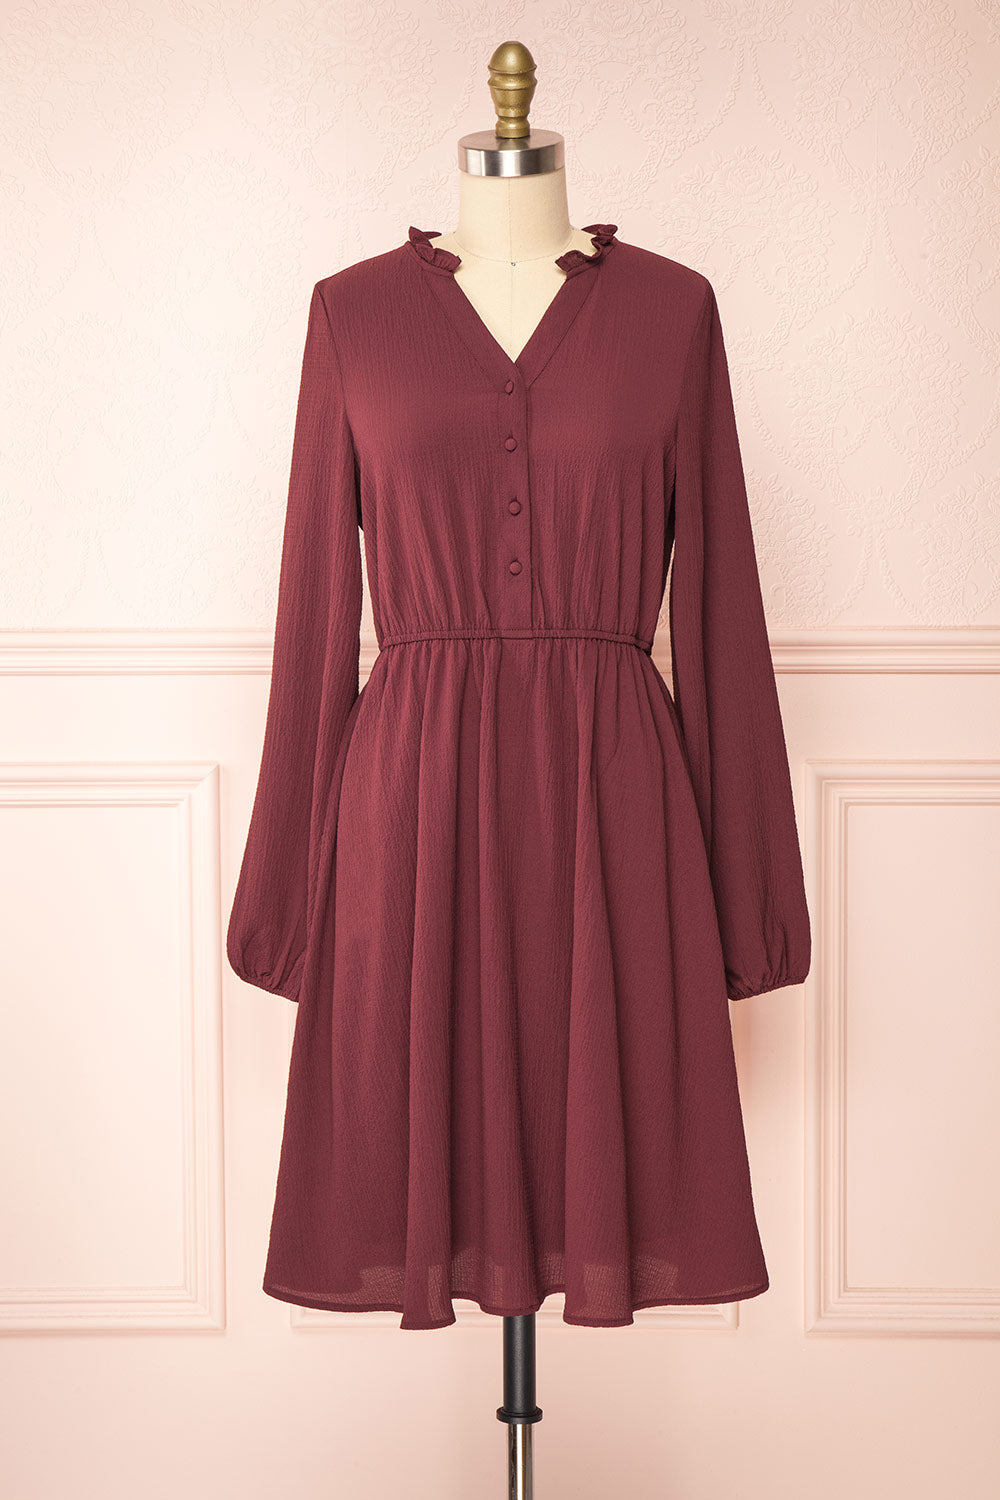 Tenzi Burgundy Long Sleeve Short Dress w/ Buttons | Boutique 1861 front view